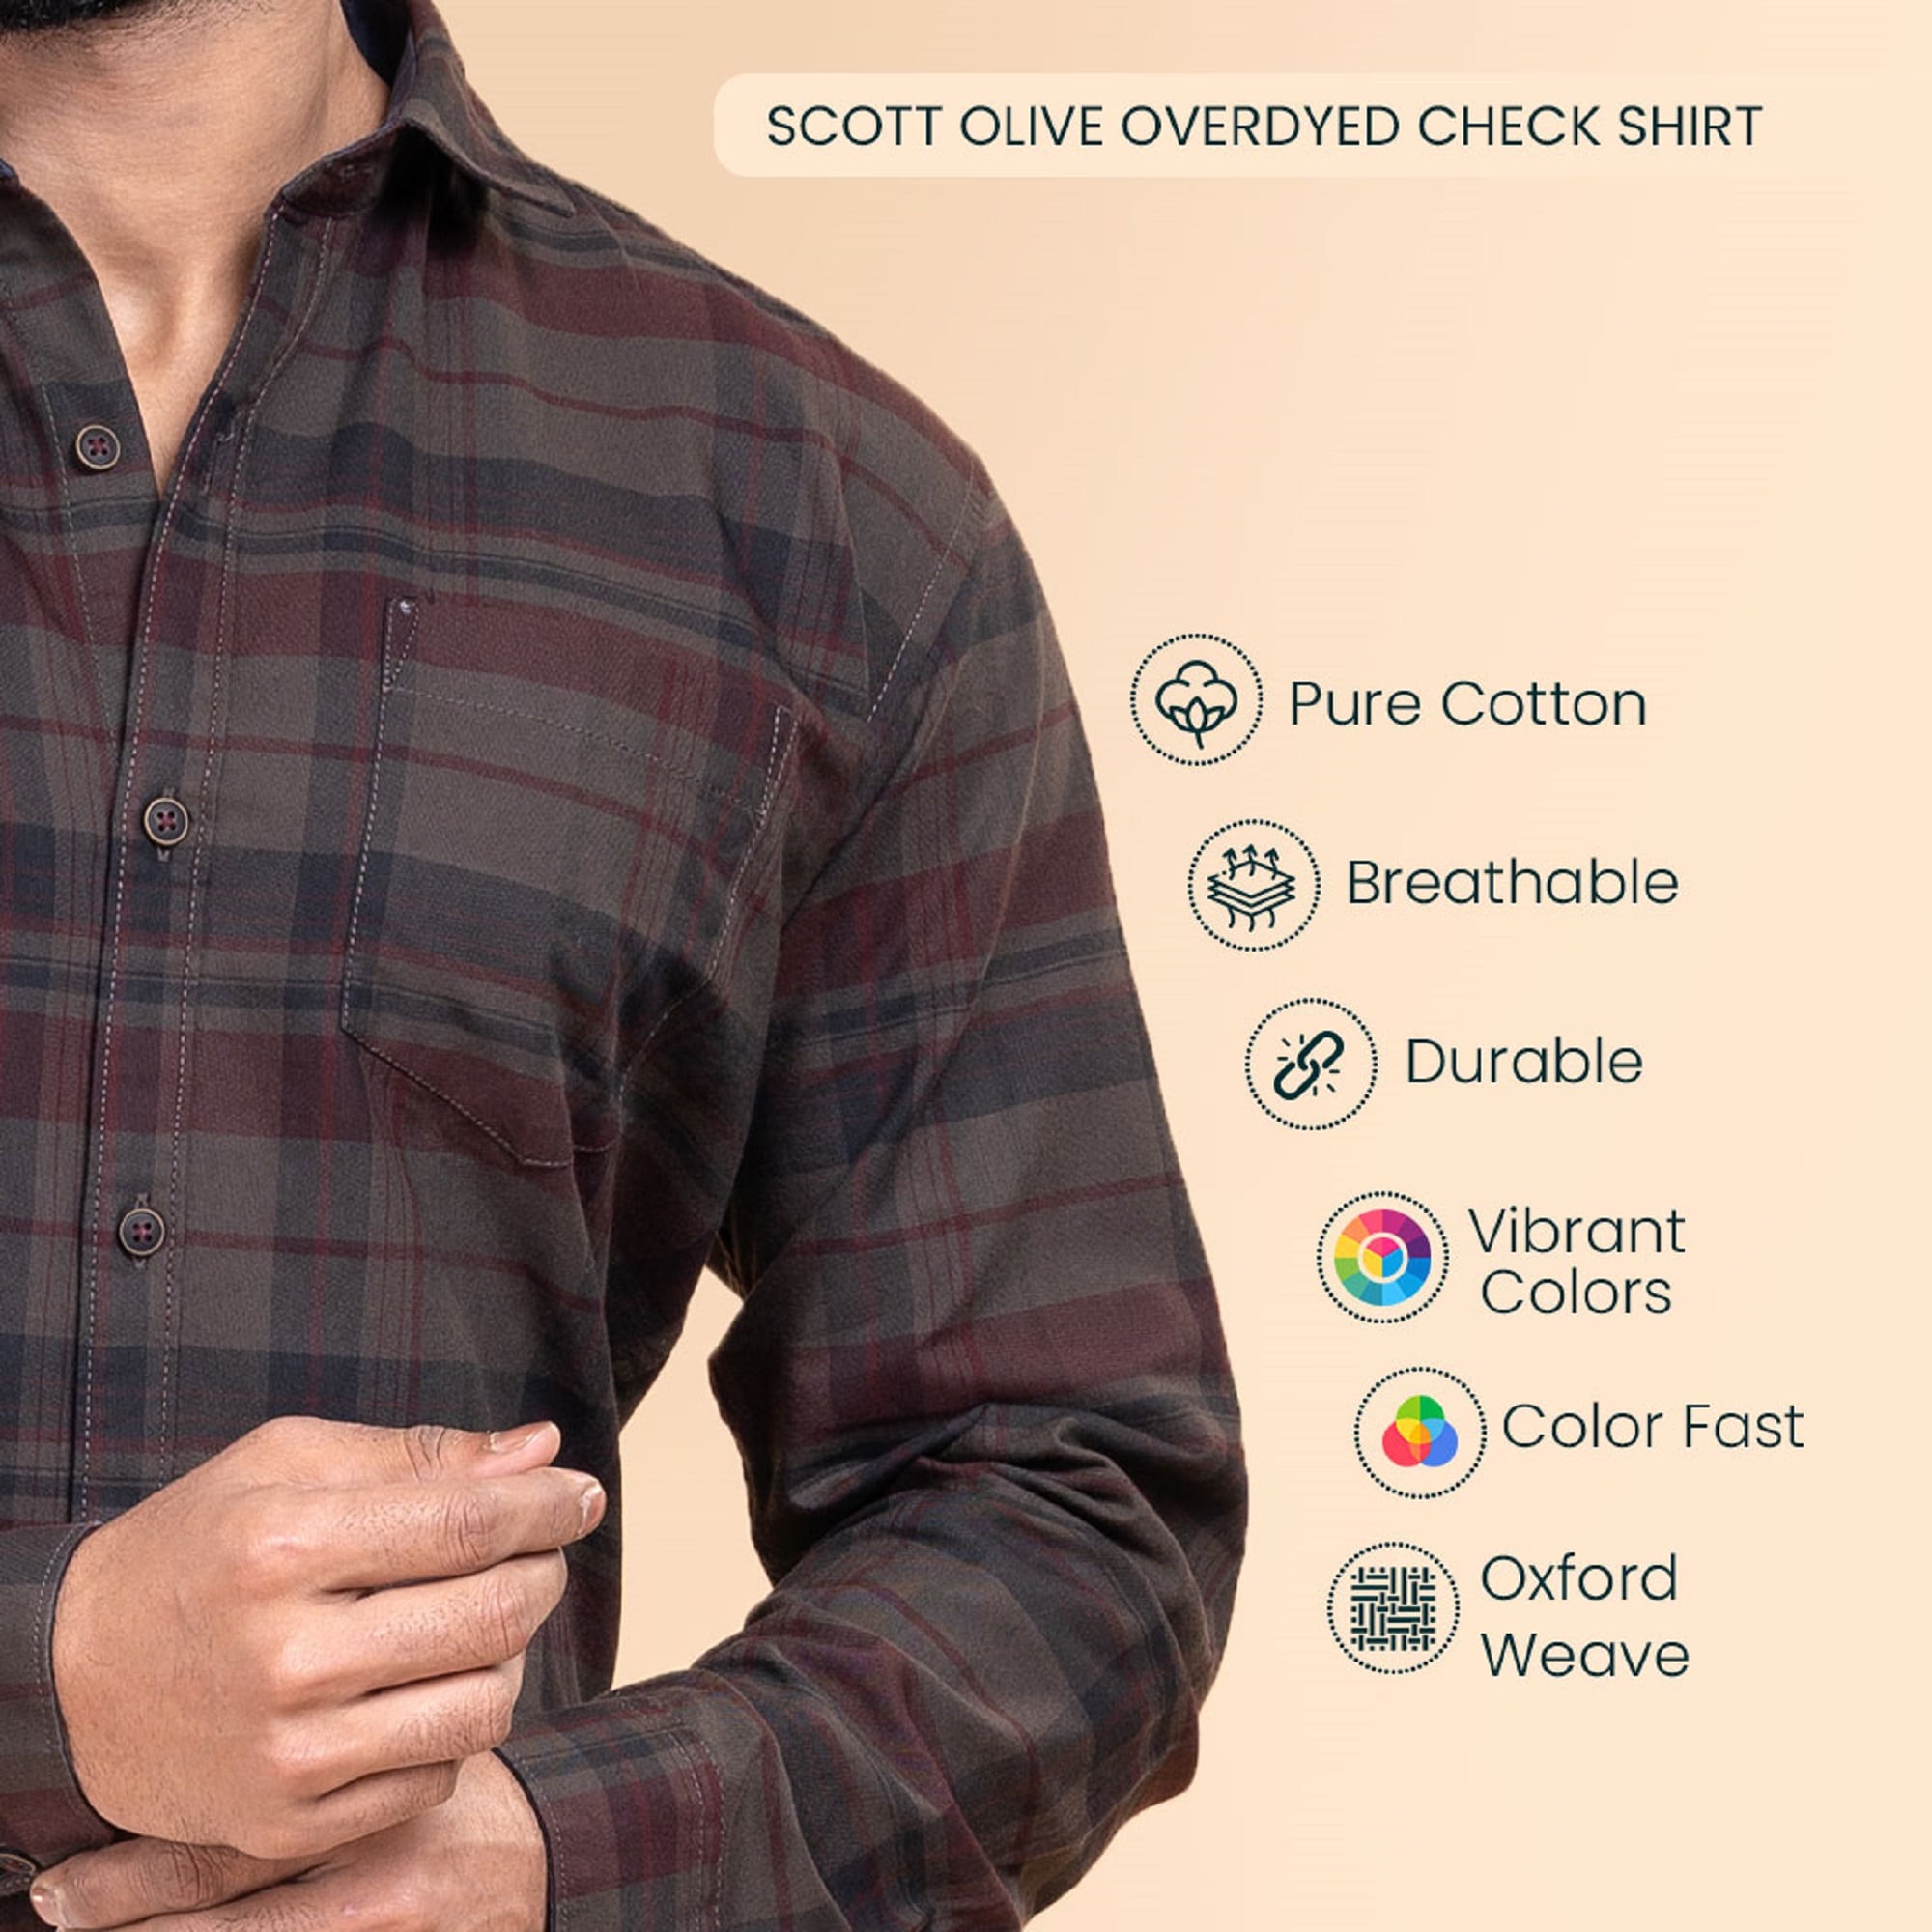 Scott Olive Overdyed Check Shirt